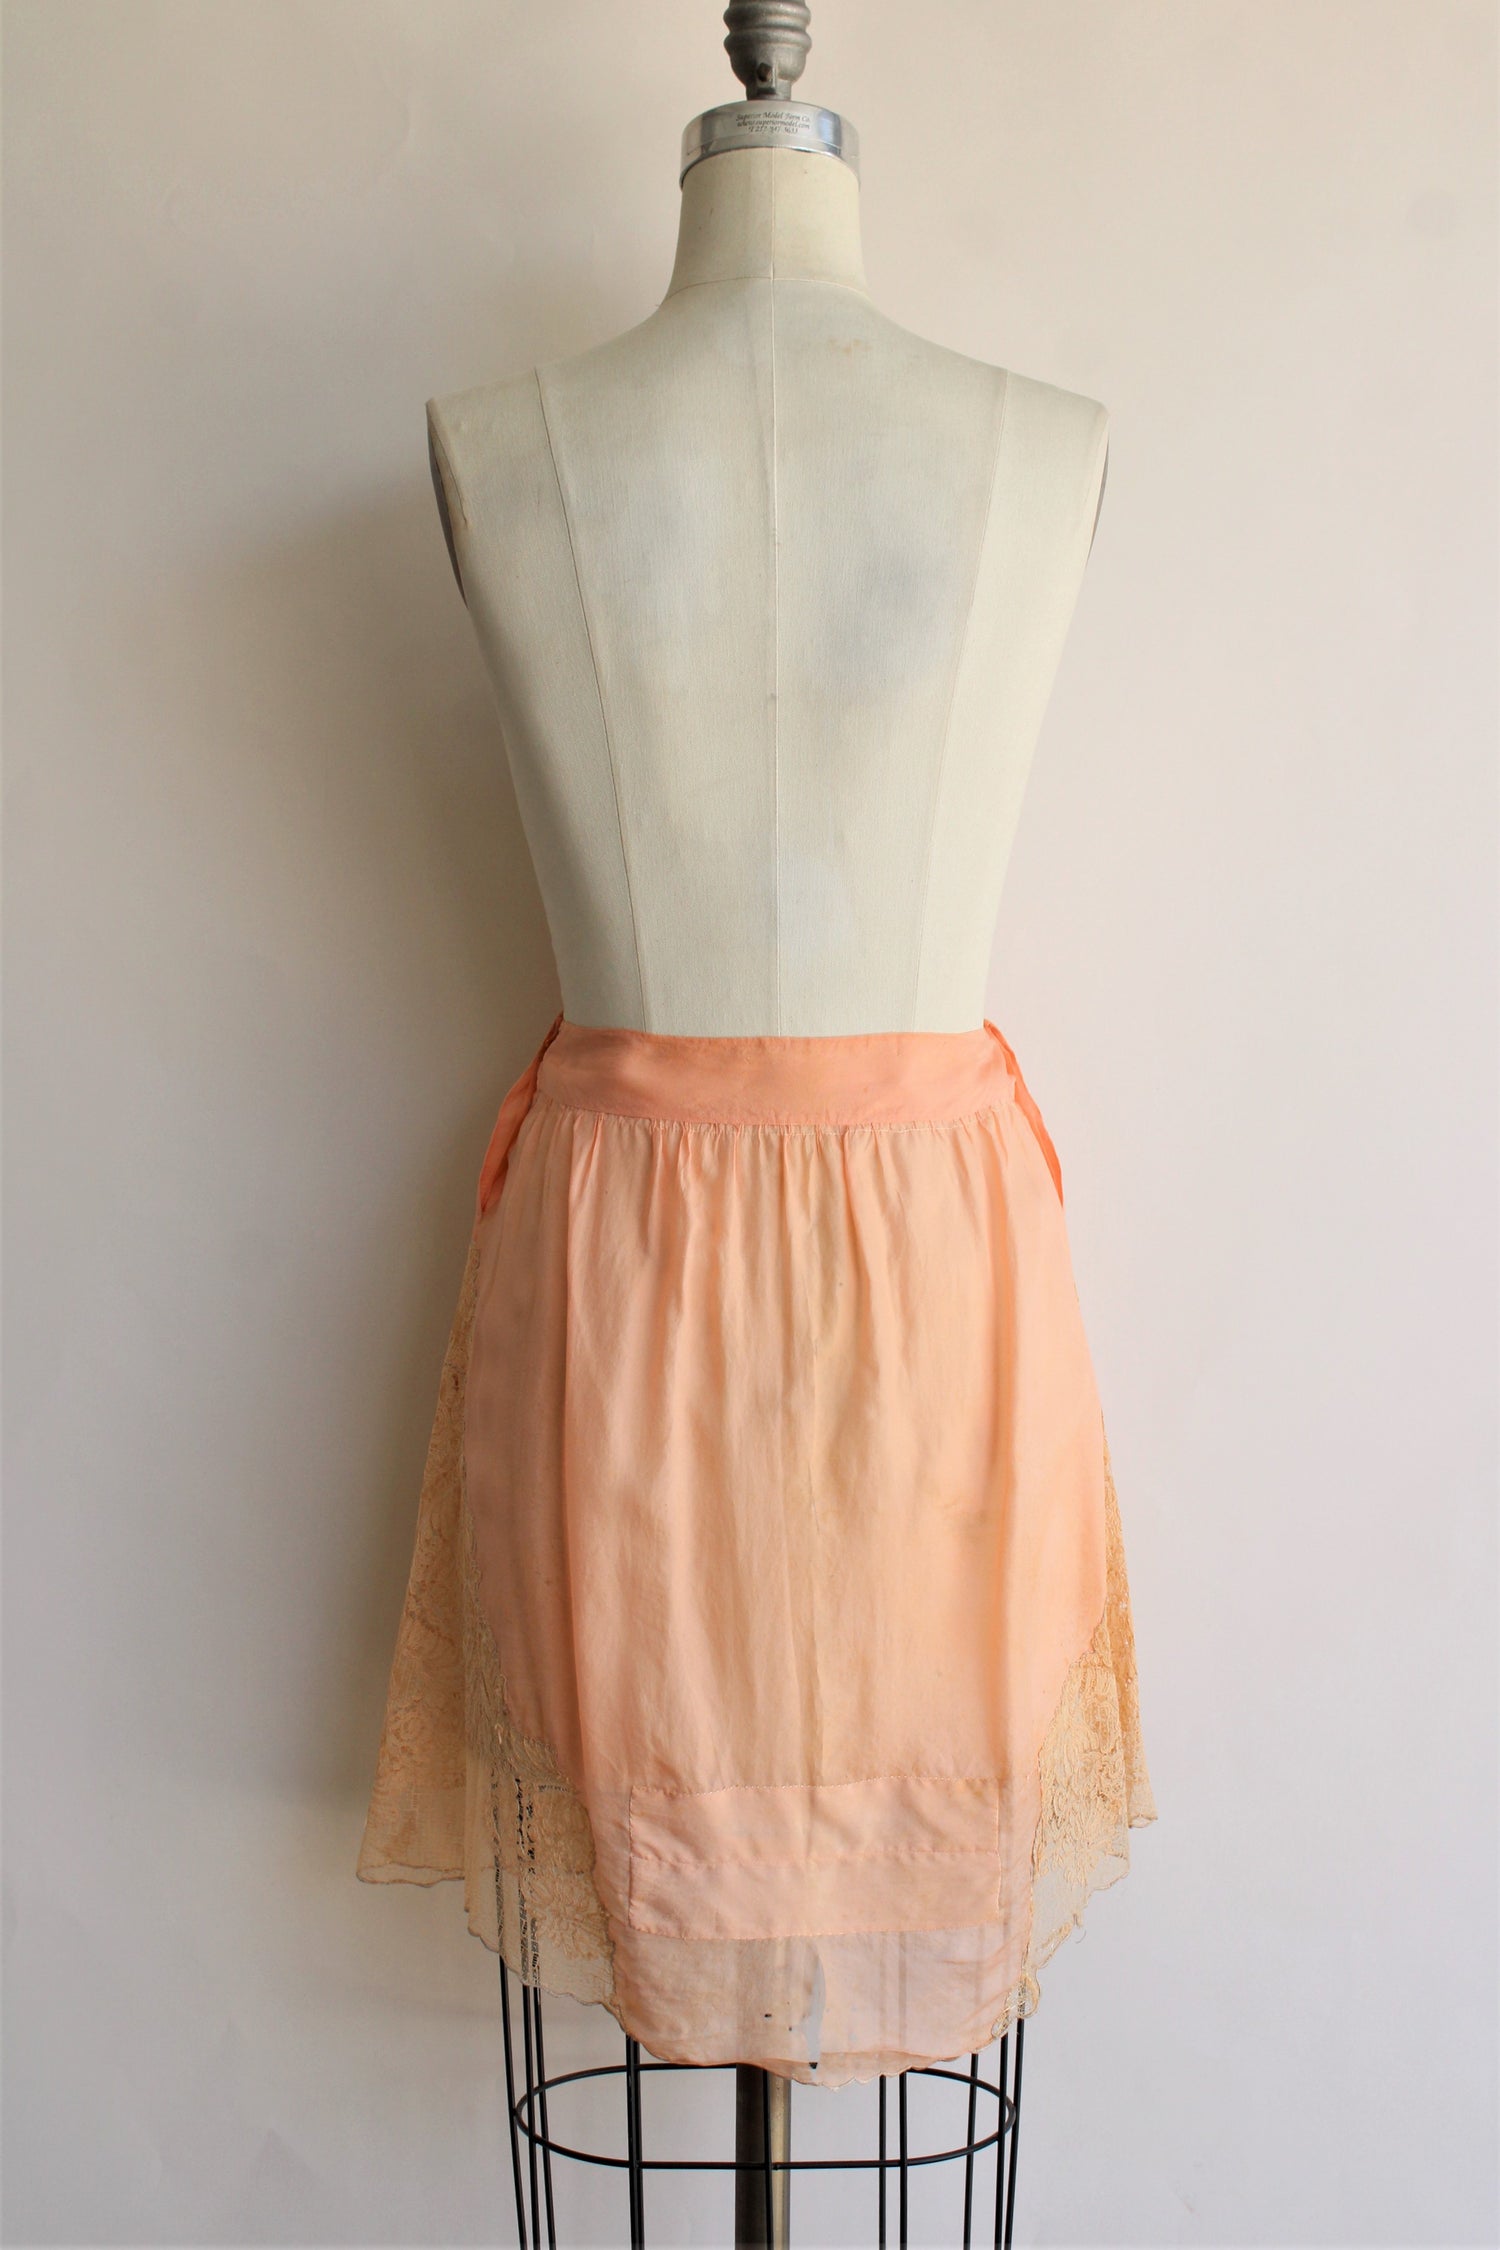 Antique 1920s Silk and Lace Half Slip